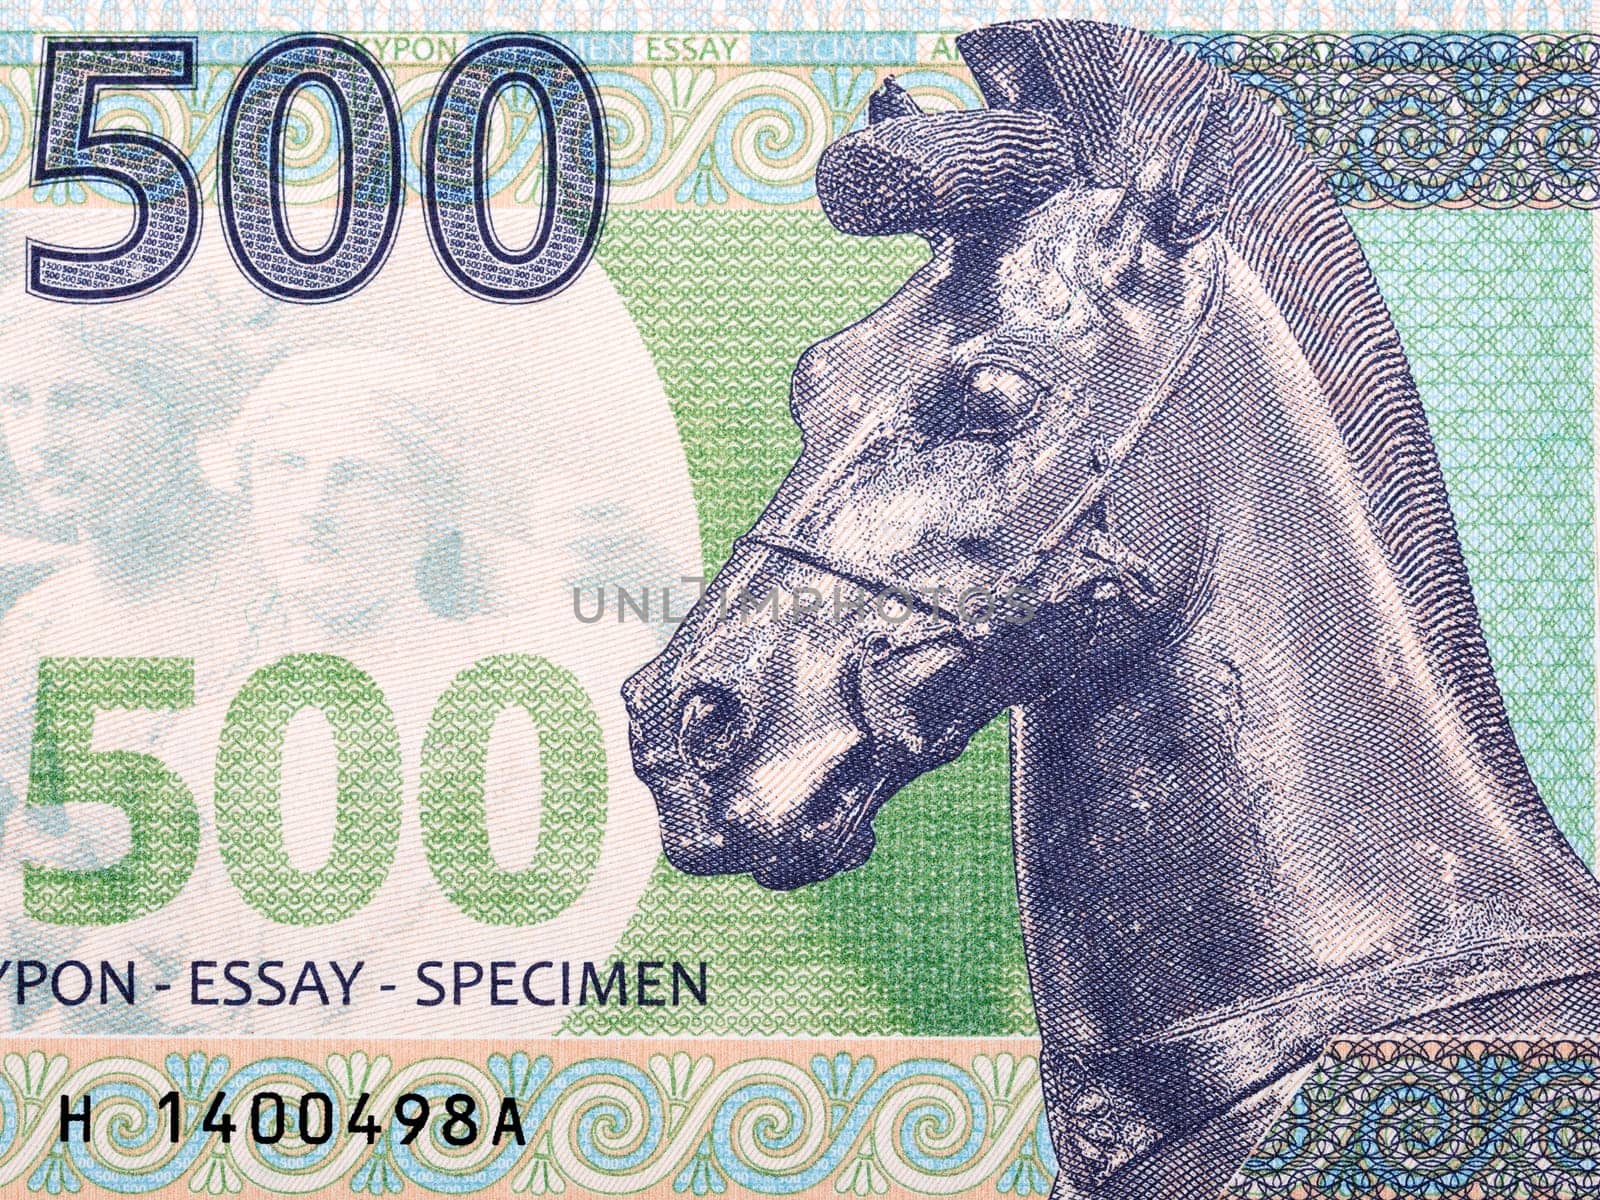 Horse statue from Greek money by johan10